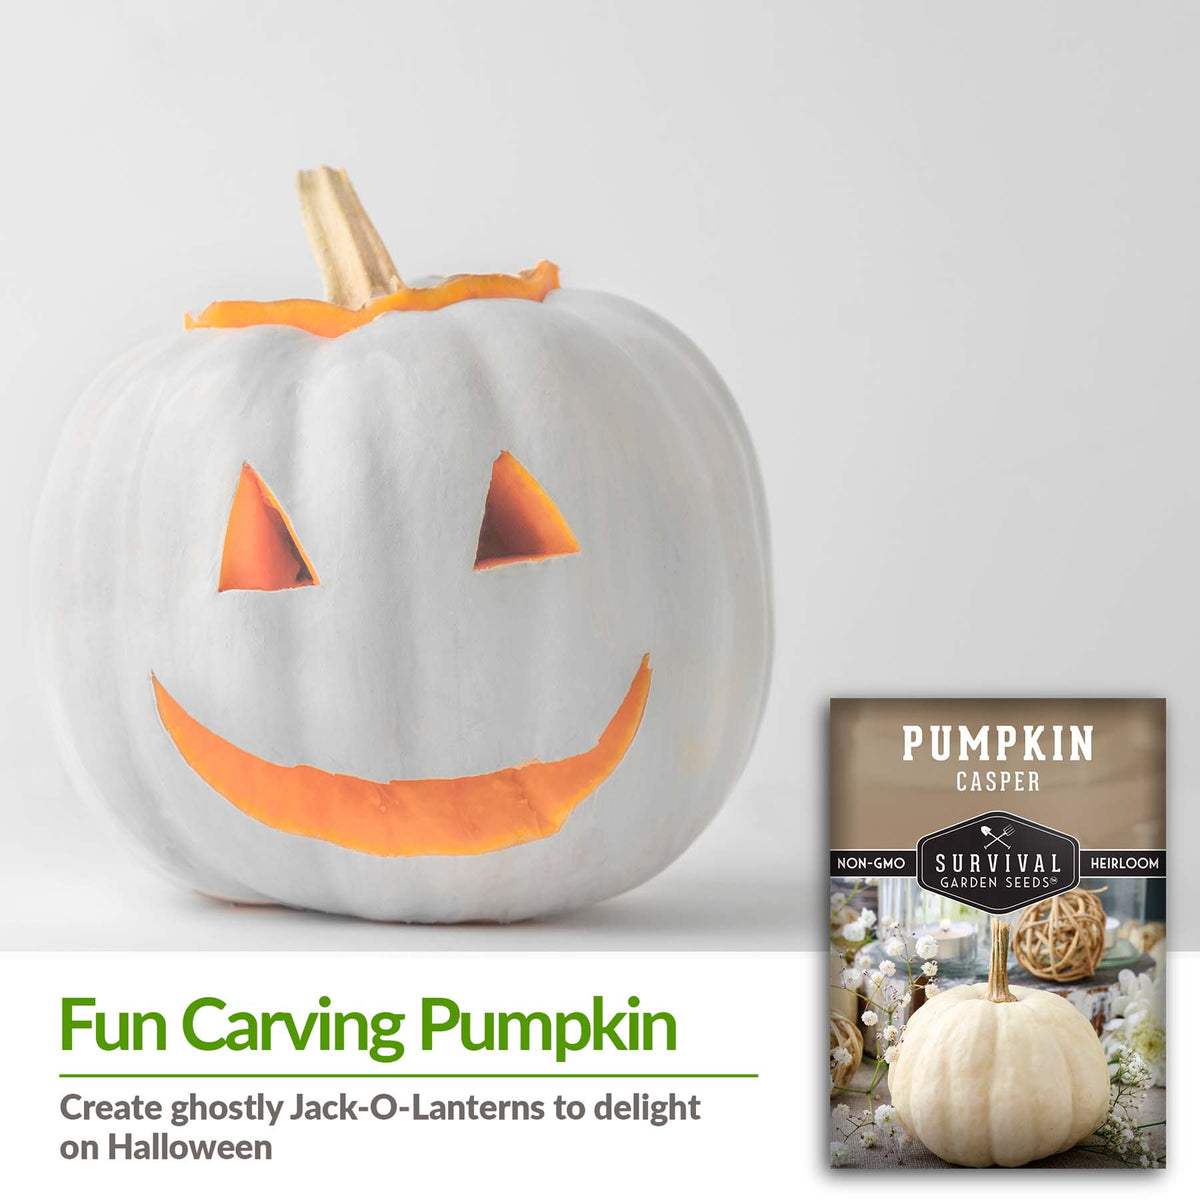 Casper Pumpkins are a fun carving pumpkin